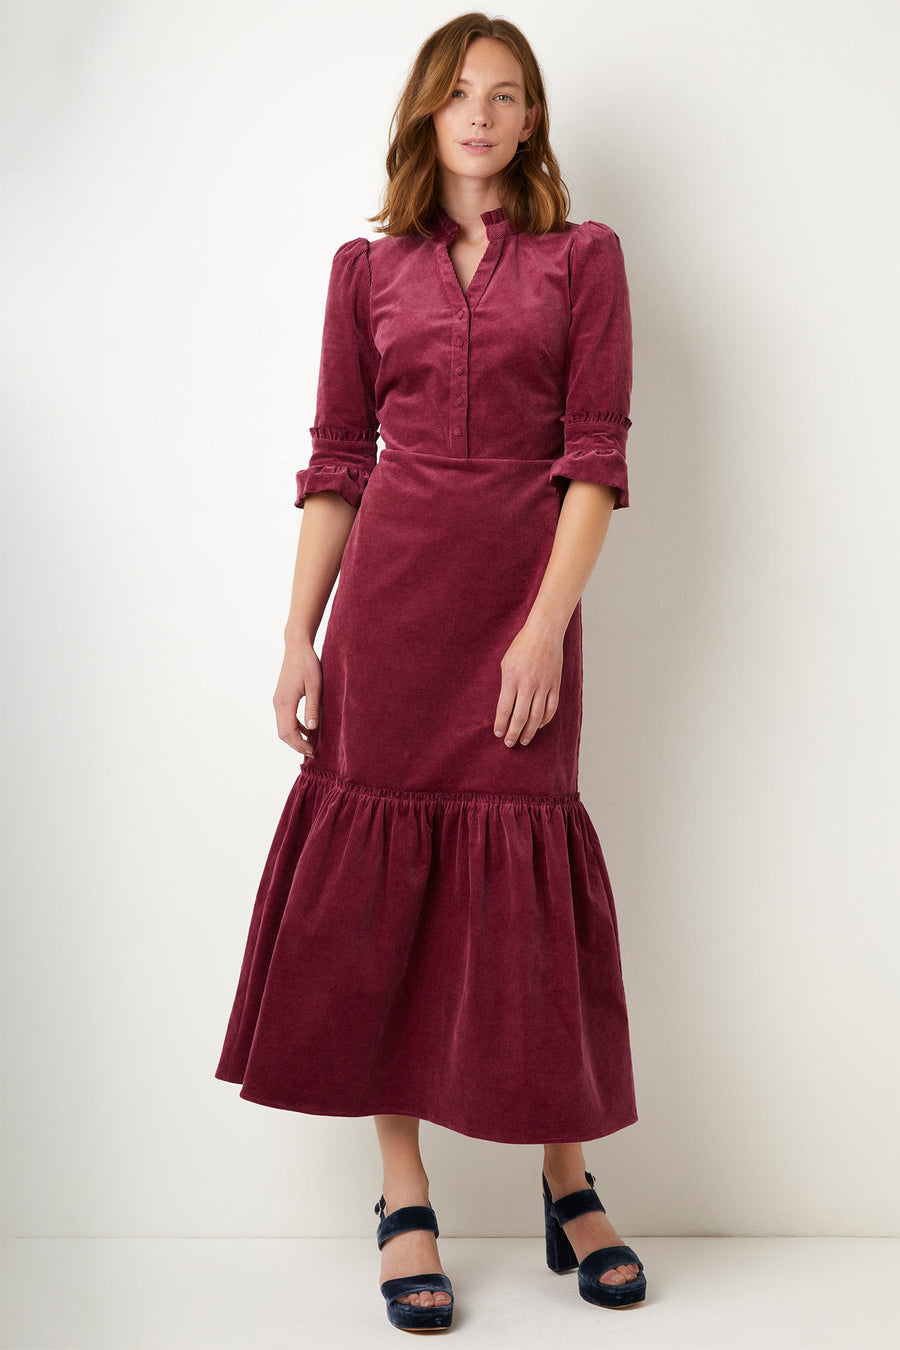 Isobel Cord Dress - Berry - Regular